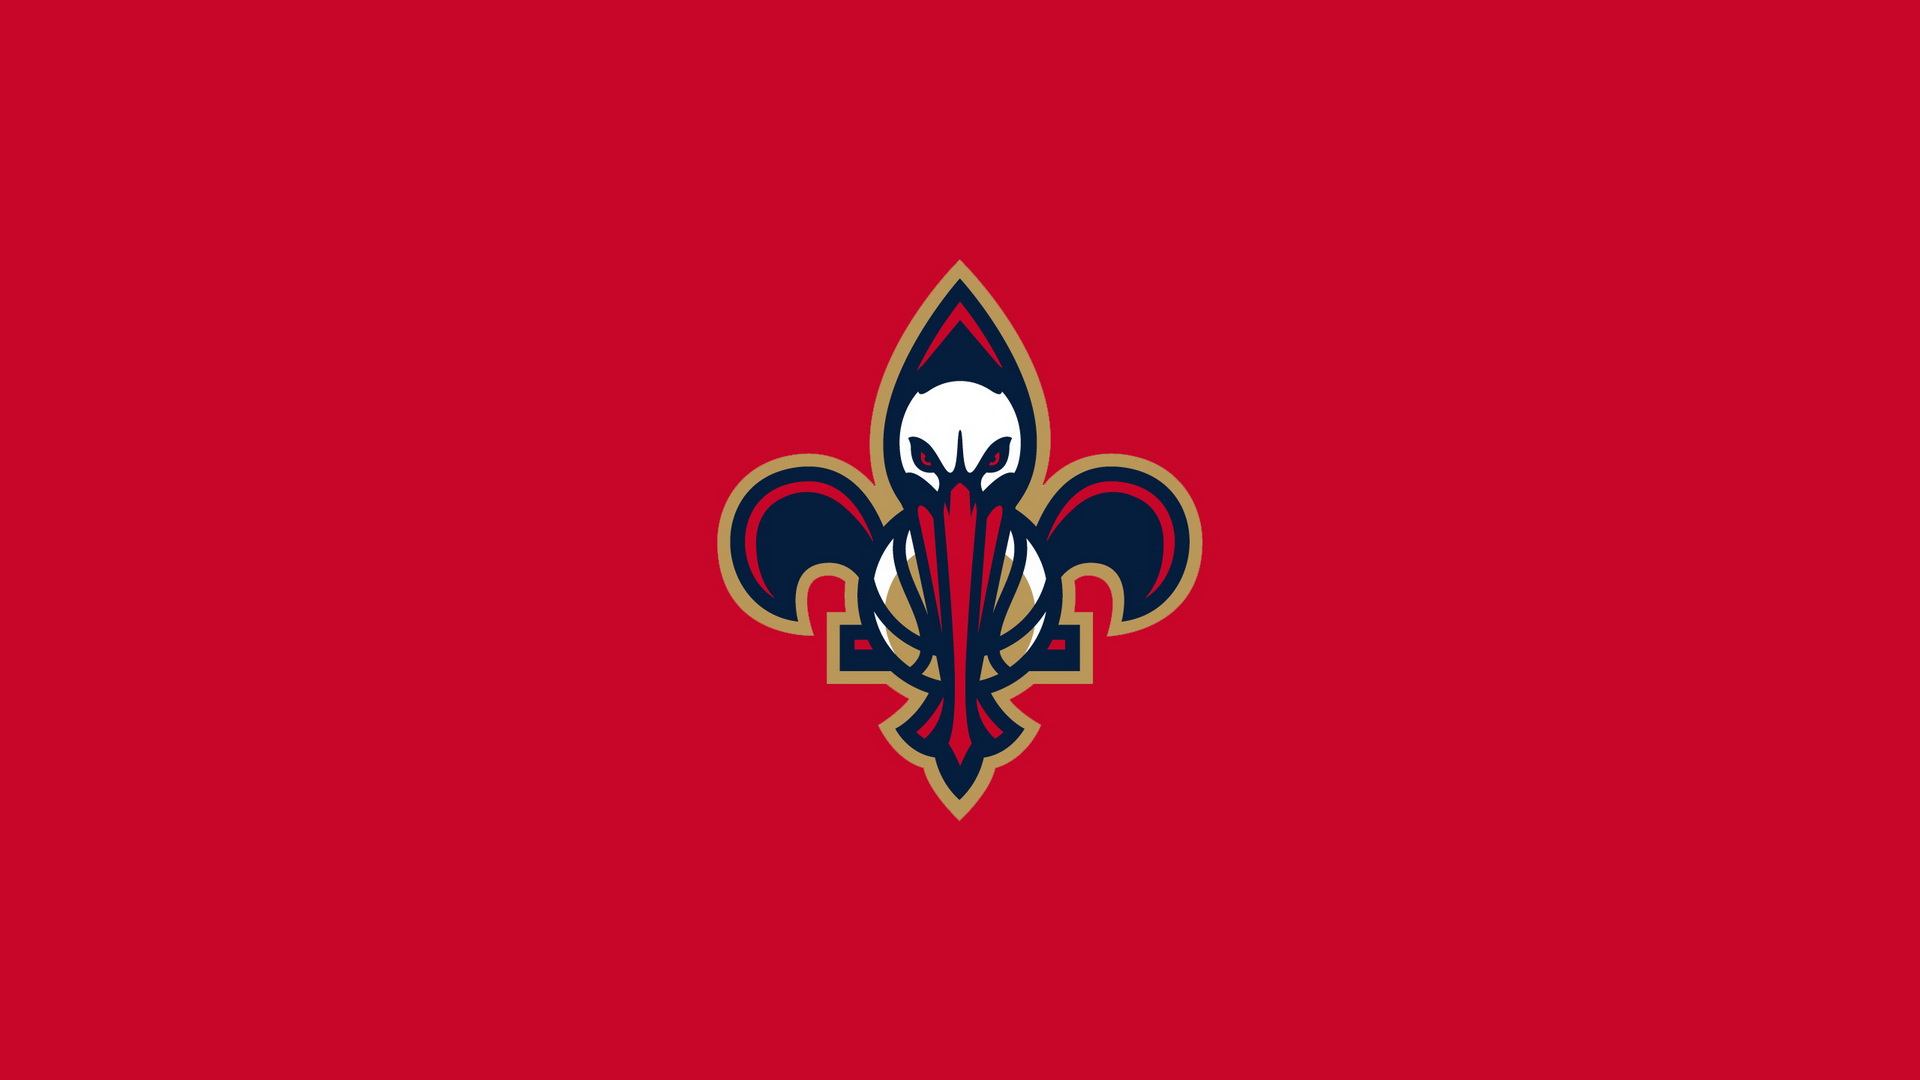 New Orleans Pelicans Wallpaper X